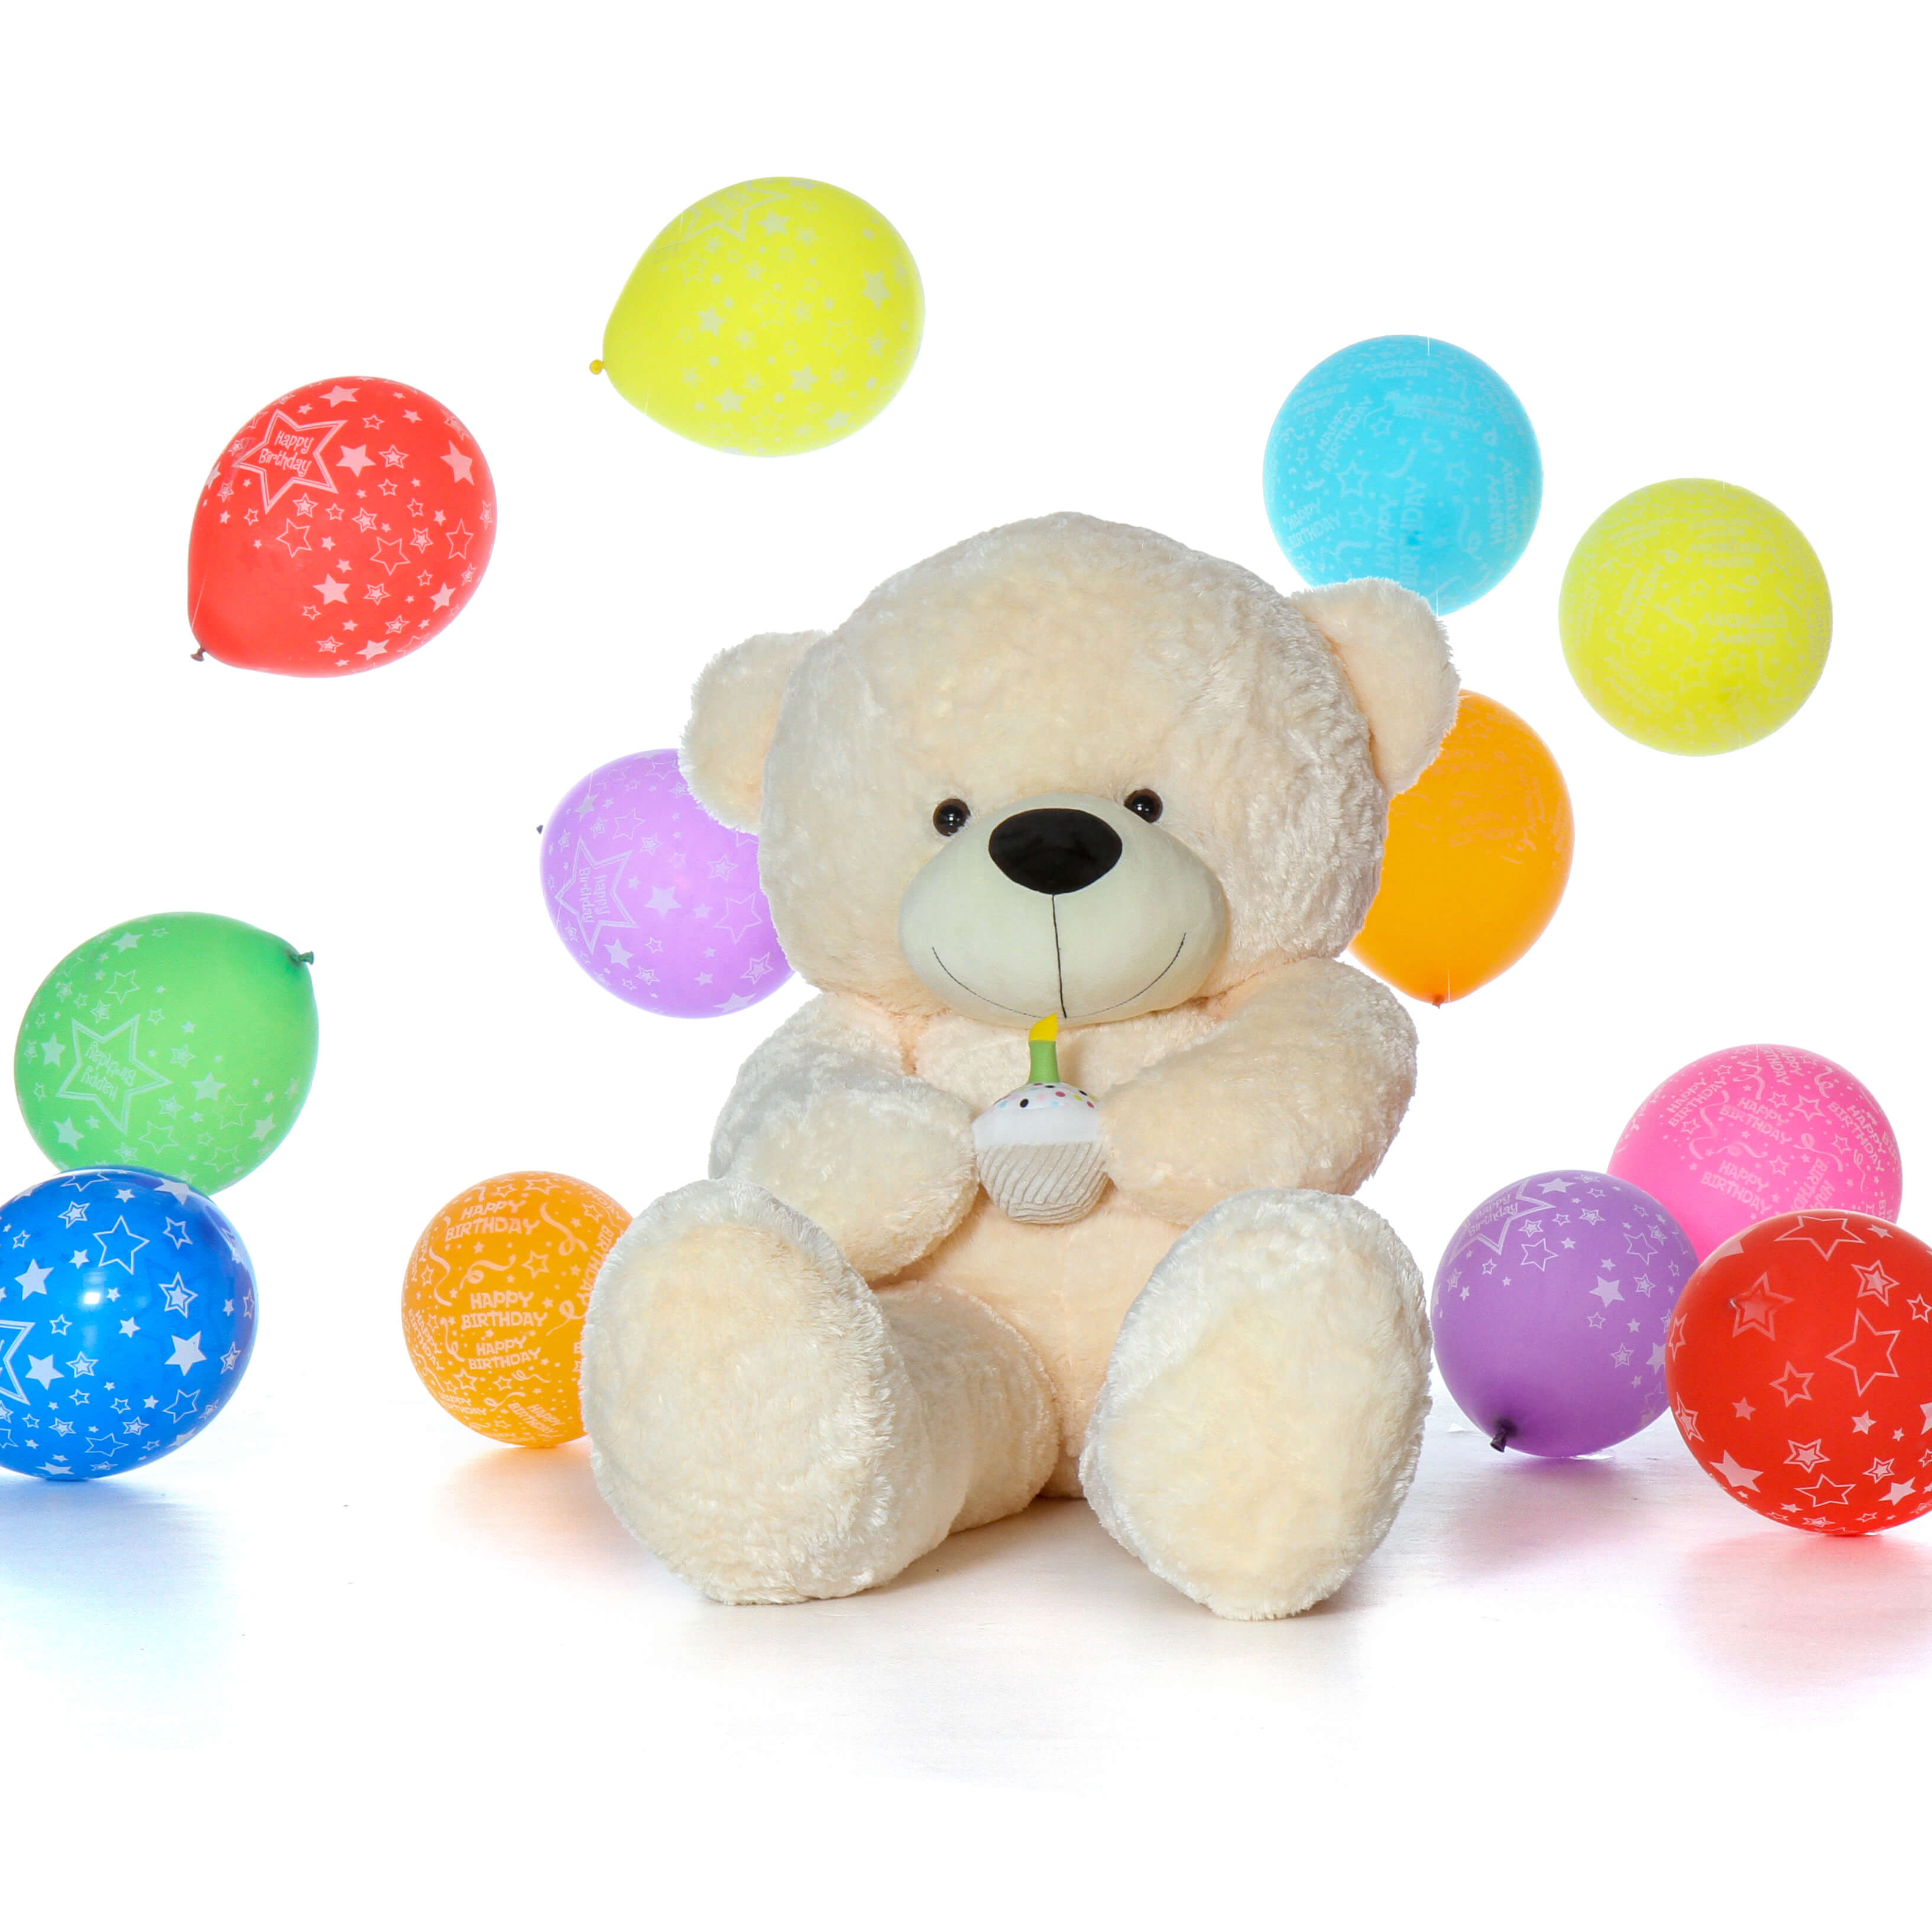 Details about   63'' Huge Big wuhite plush Teddy bear soft stuffed toys doll kids birthday gift 